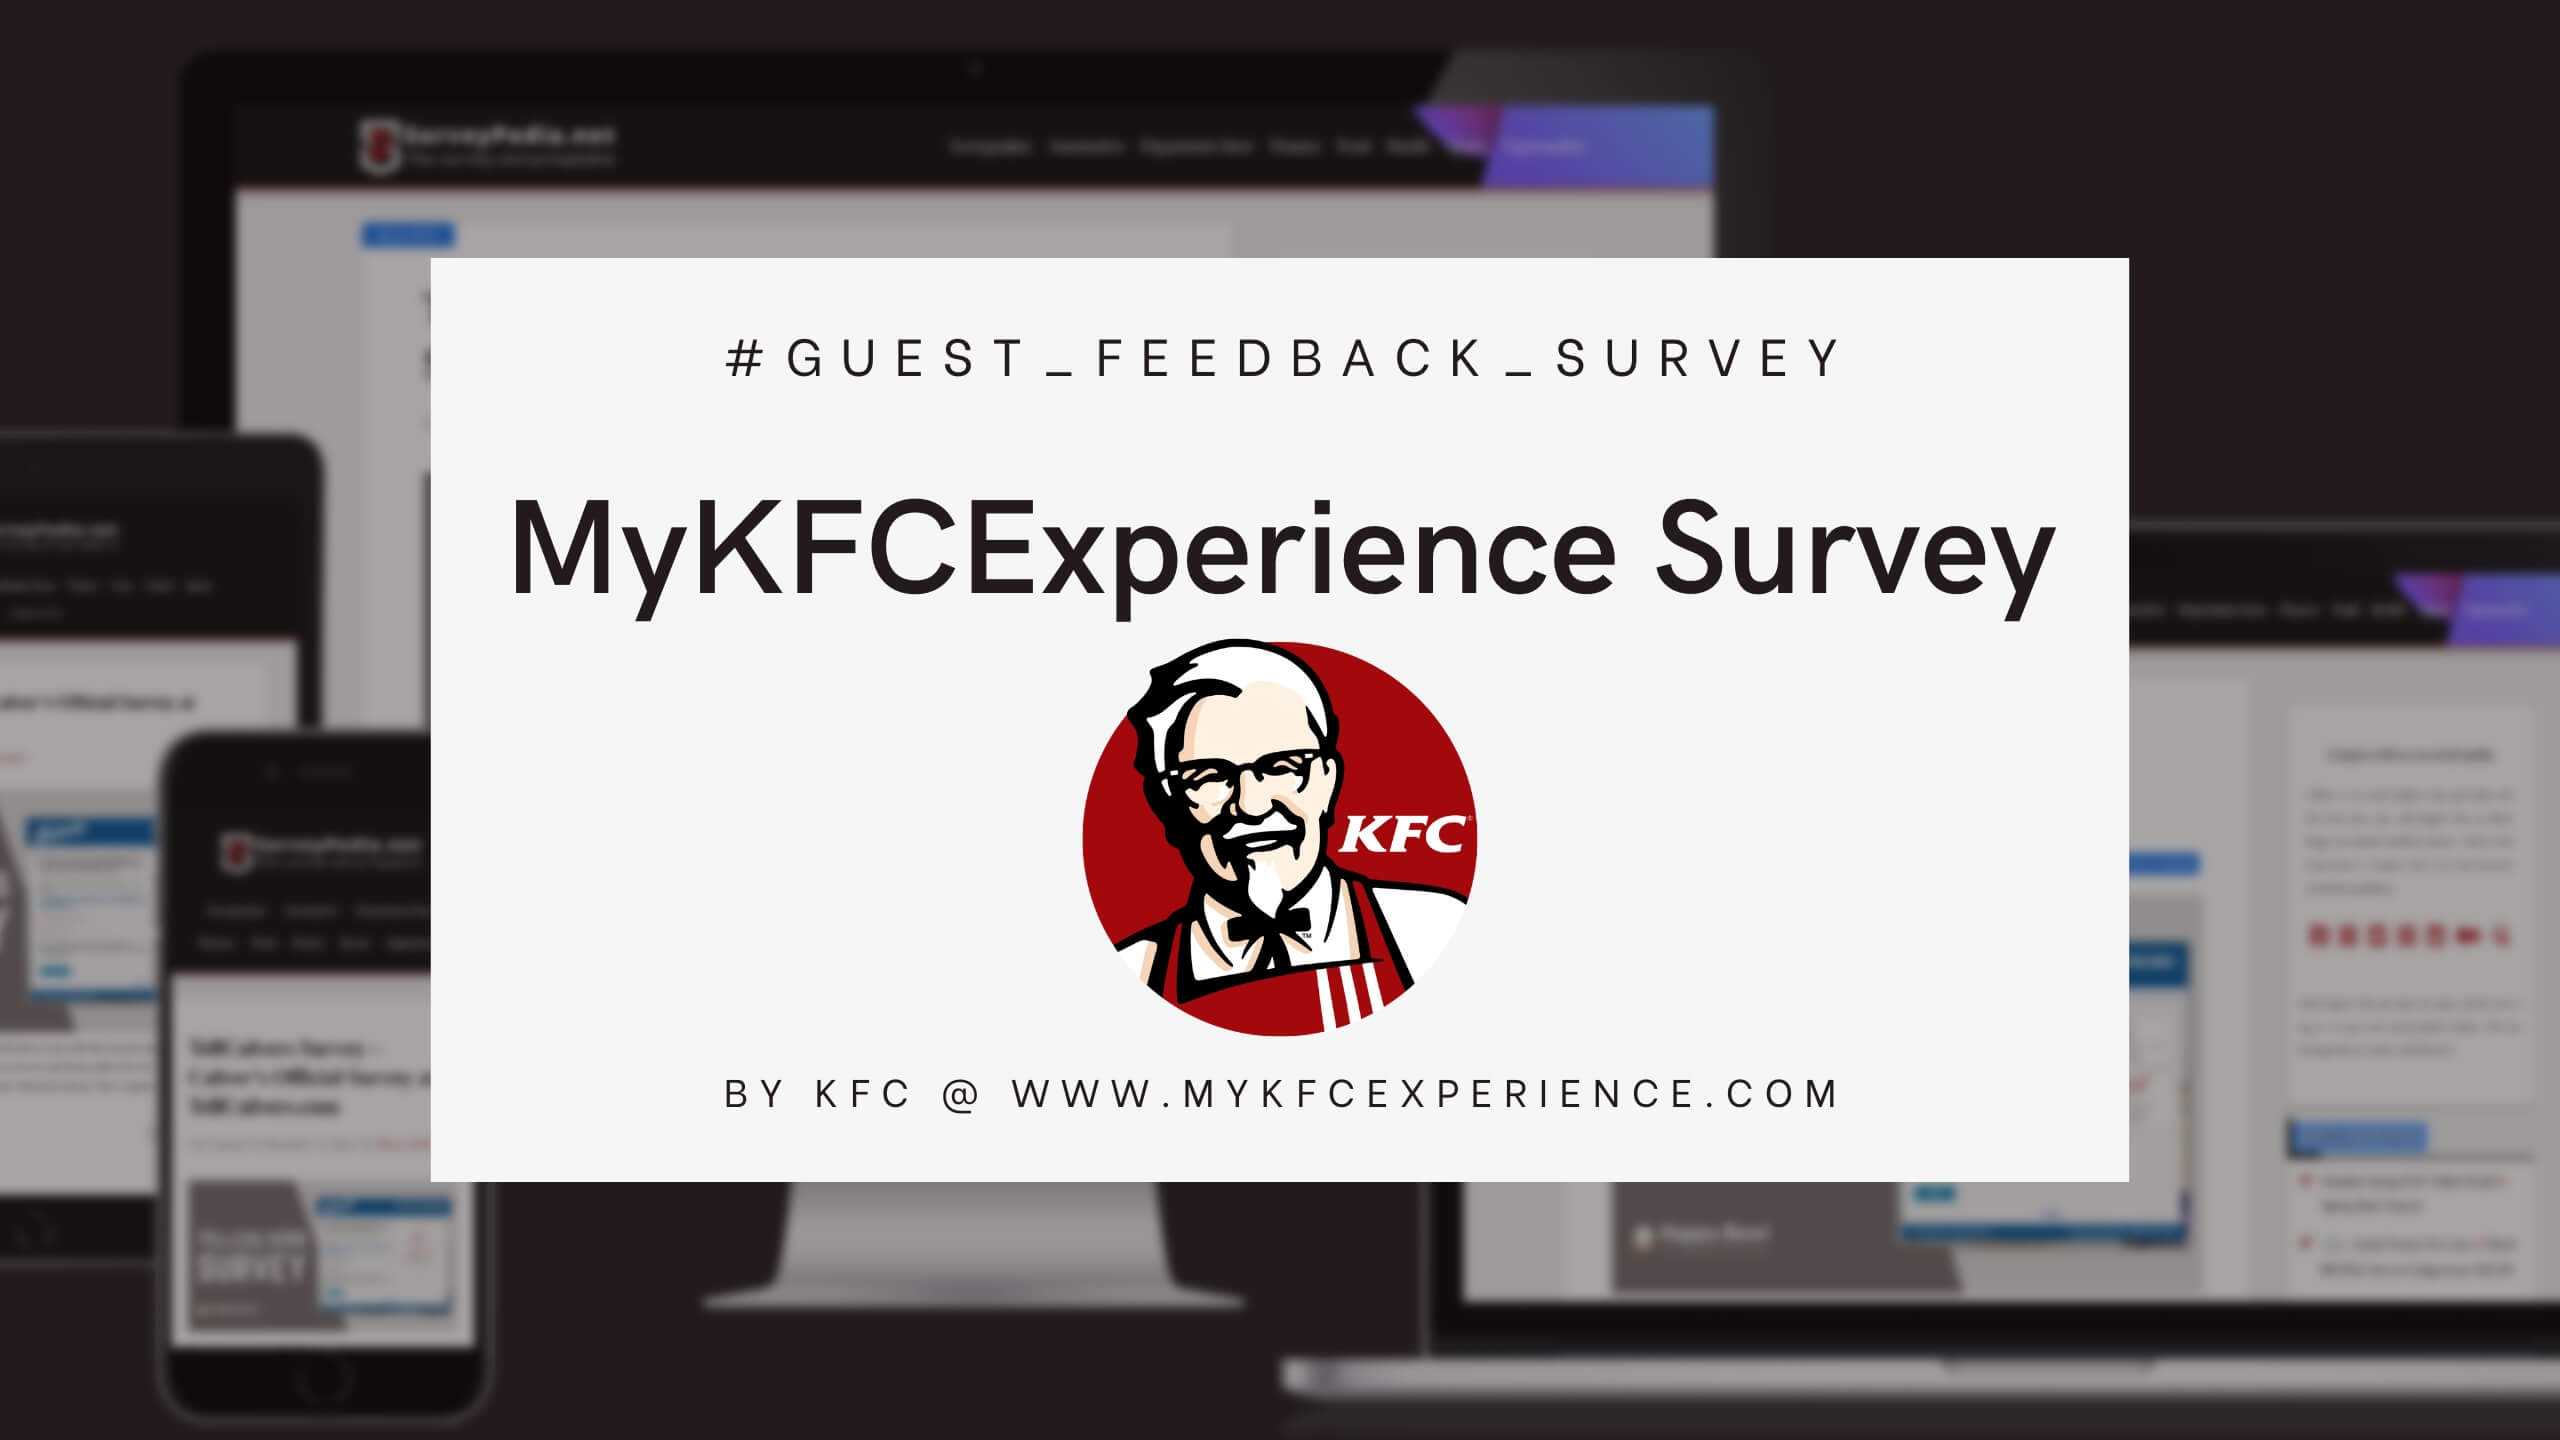 MyKFCExperience Survey: KFC Official Customer Feedback Survey at www.mykfcexperience.com